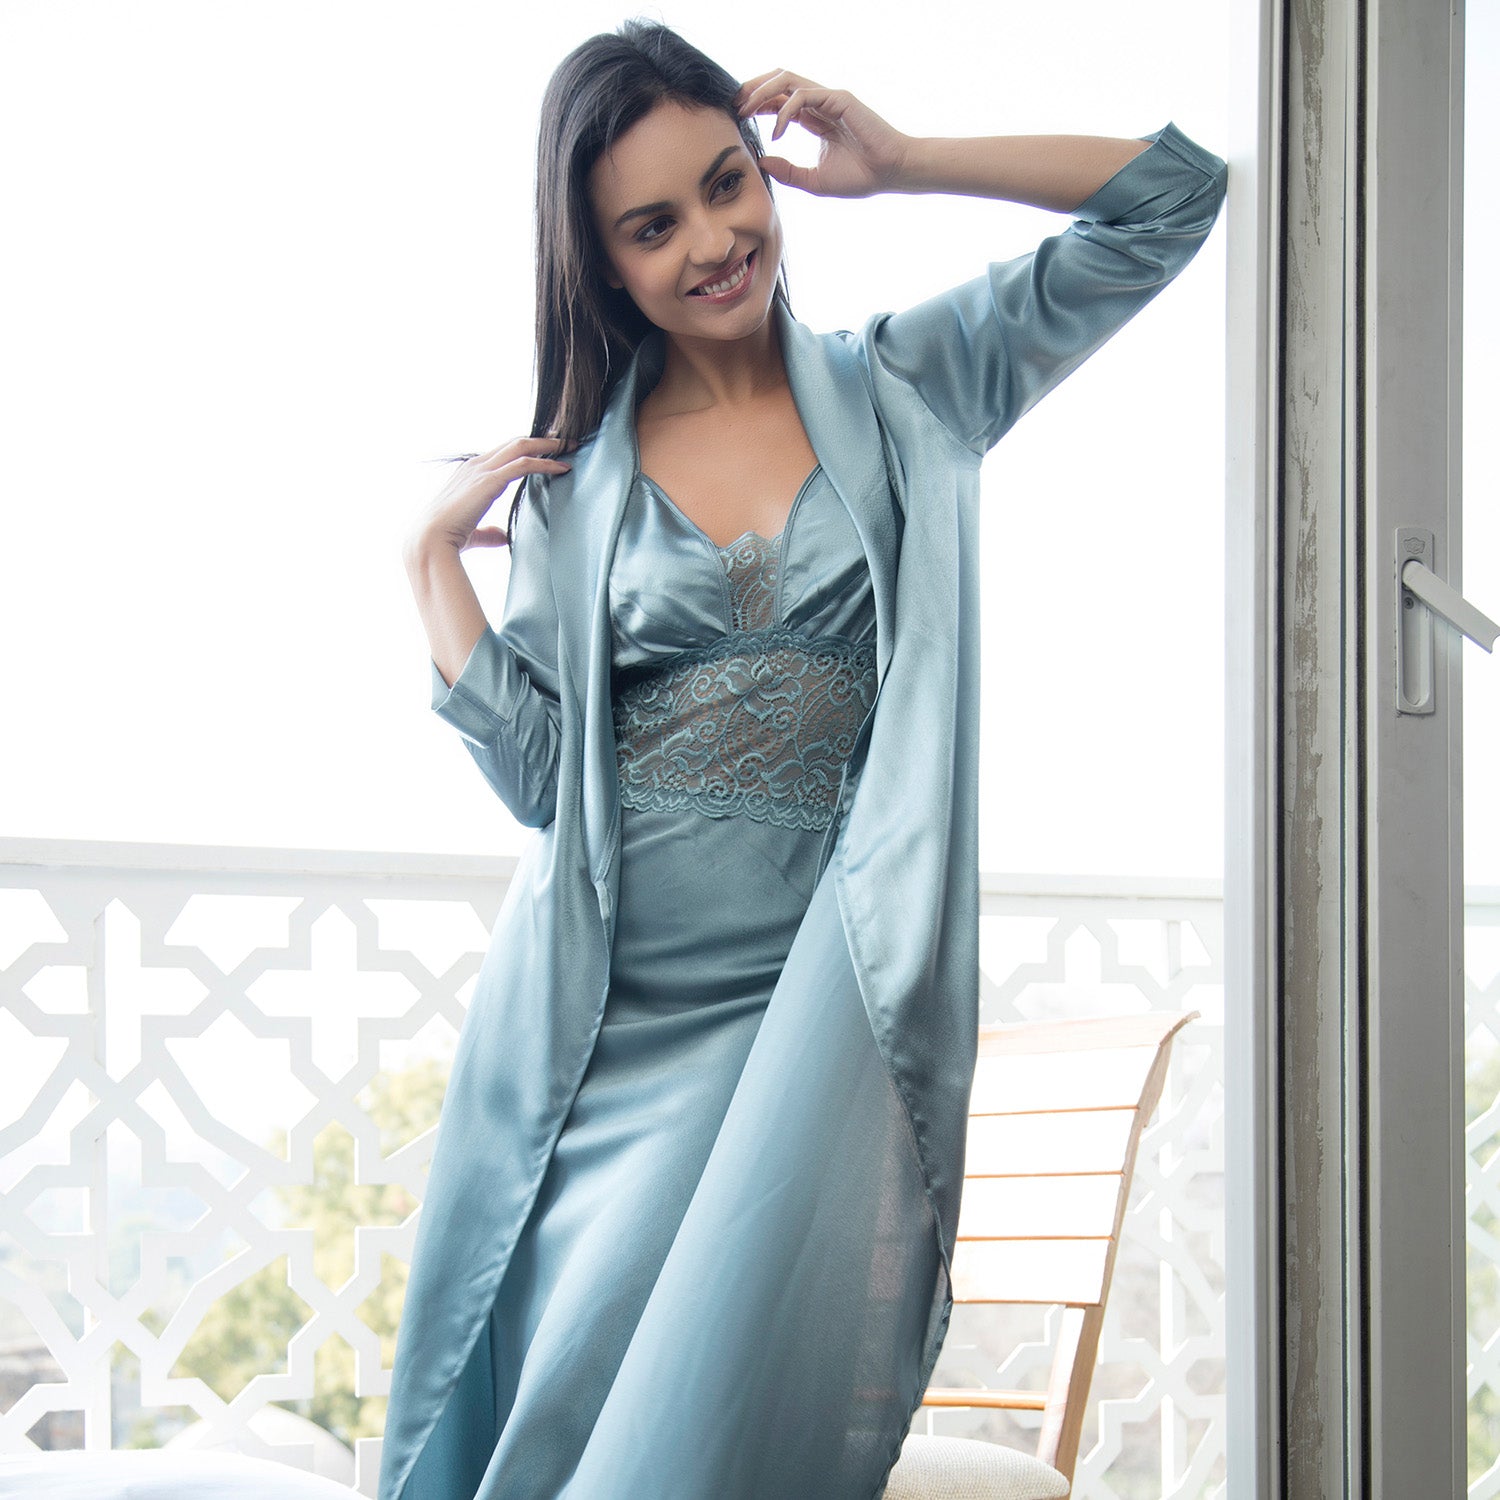 Glamorous satin nightgown set - Private Lives